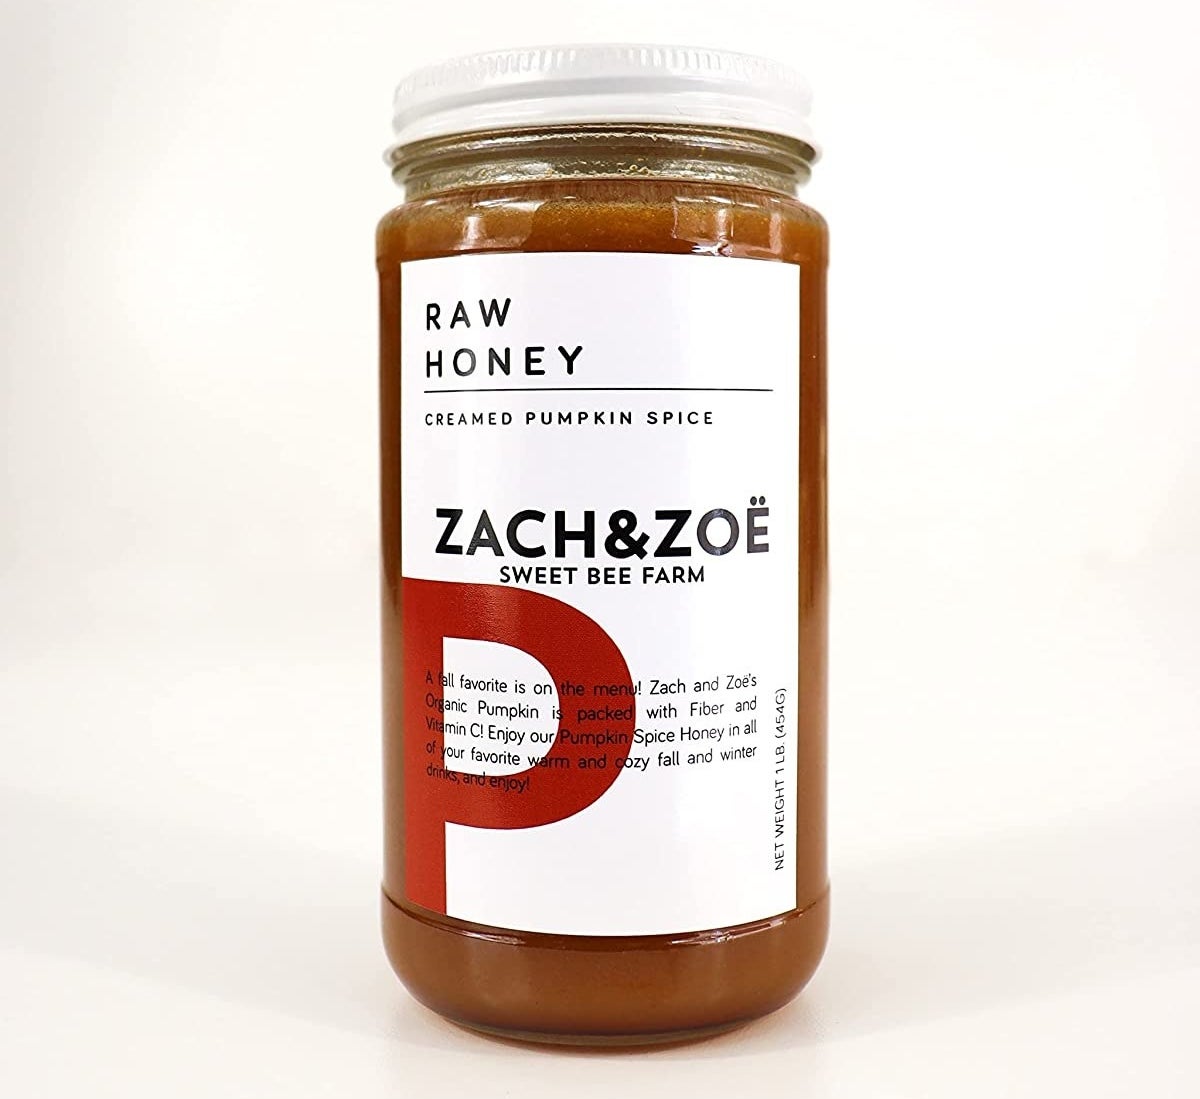 The jar of pumpkin spice honey